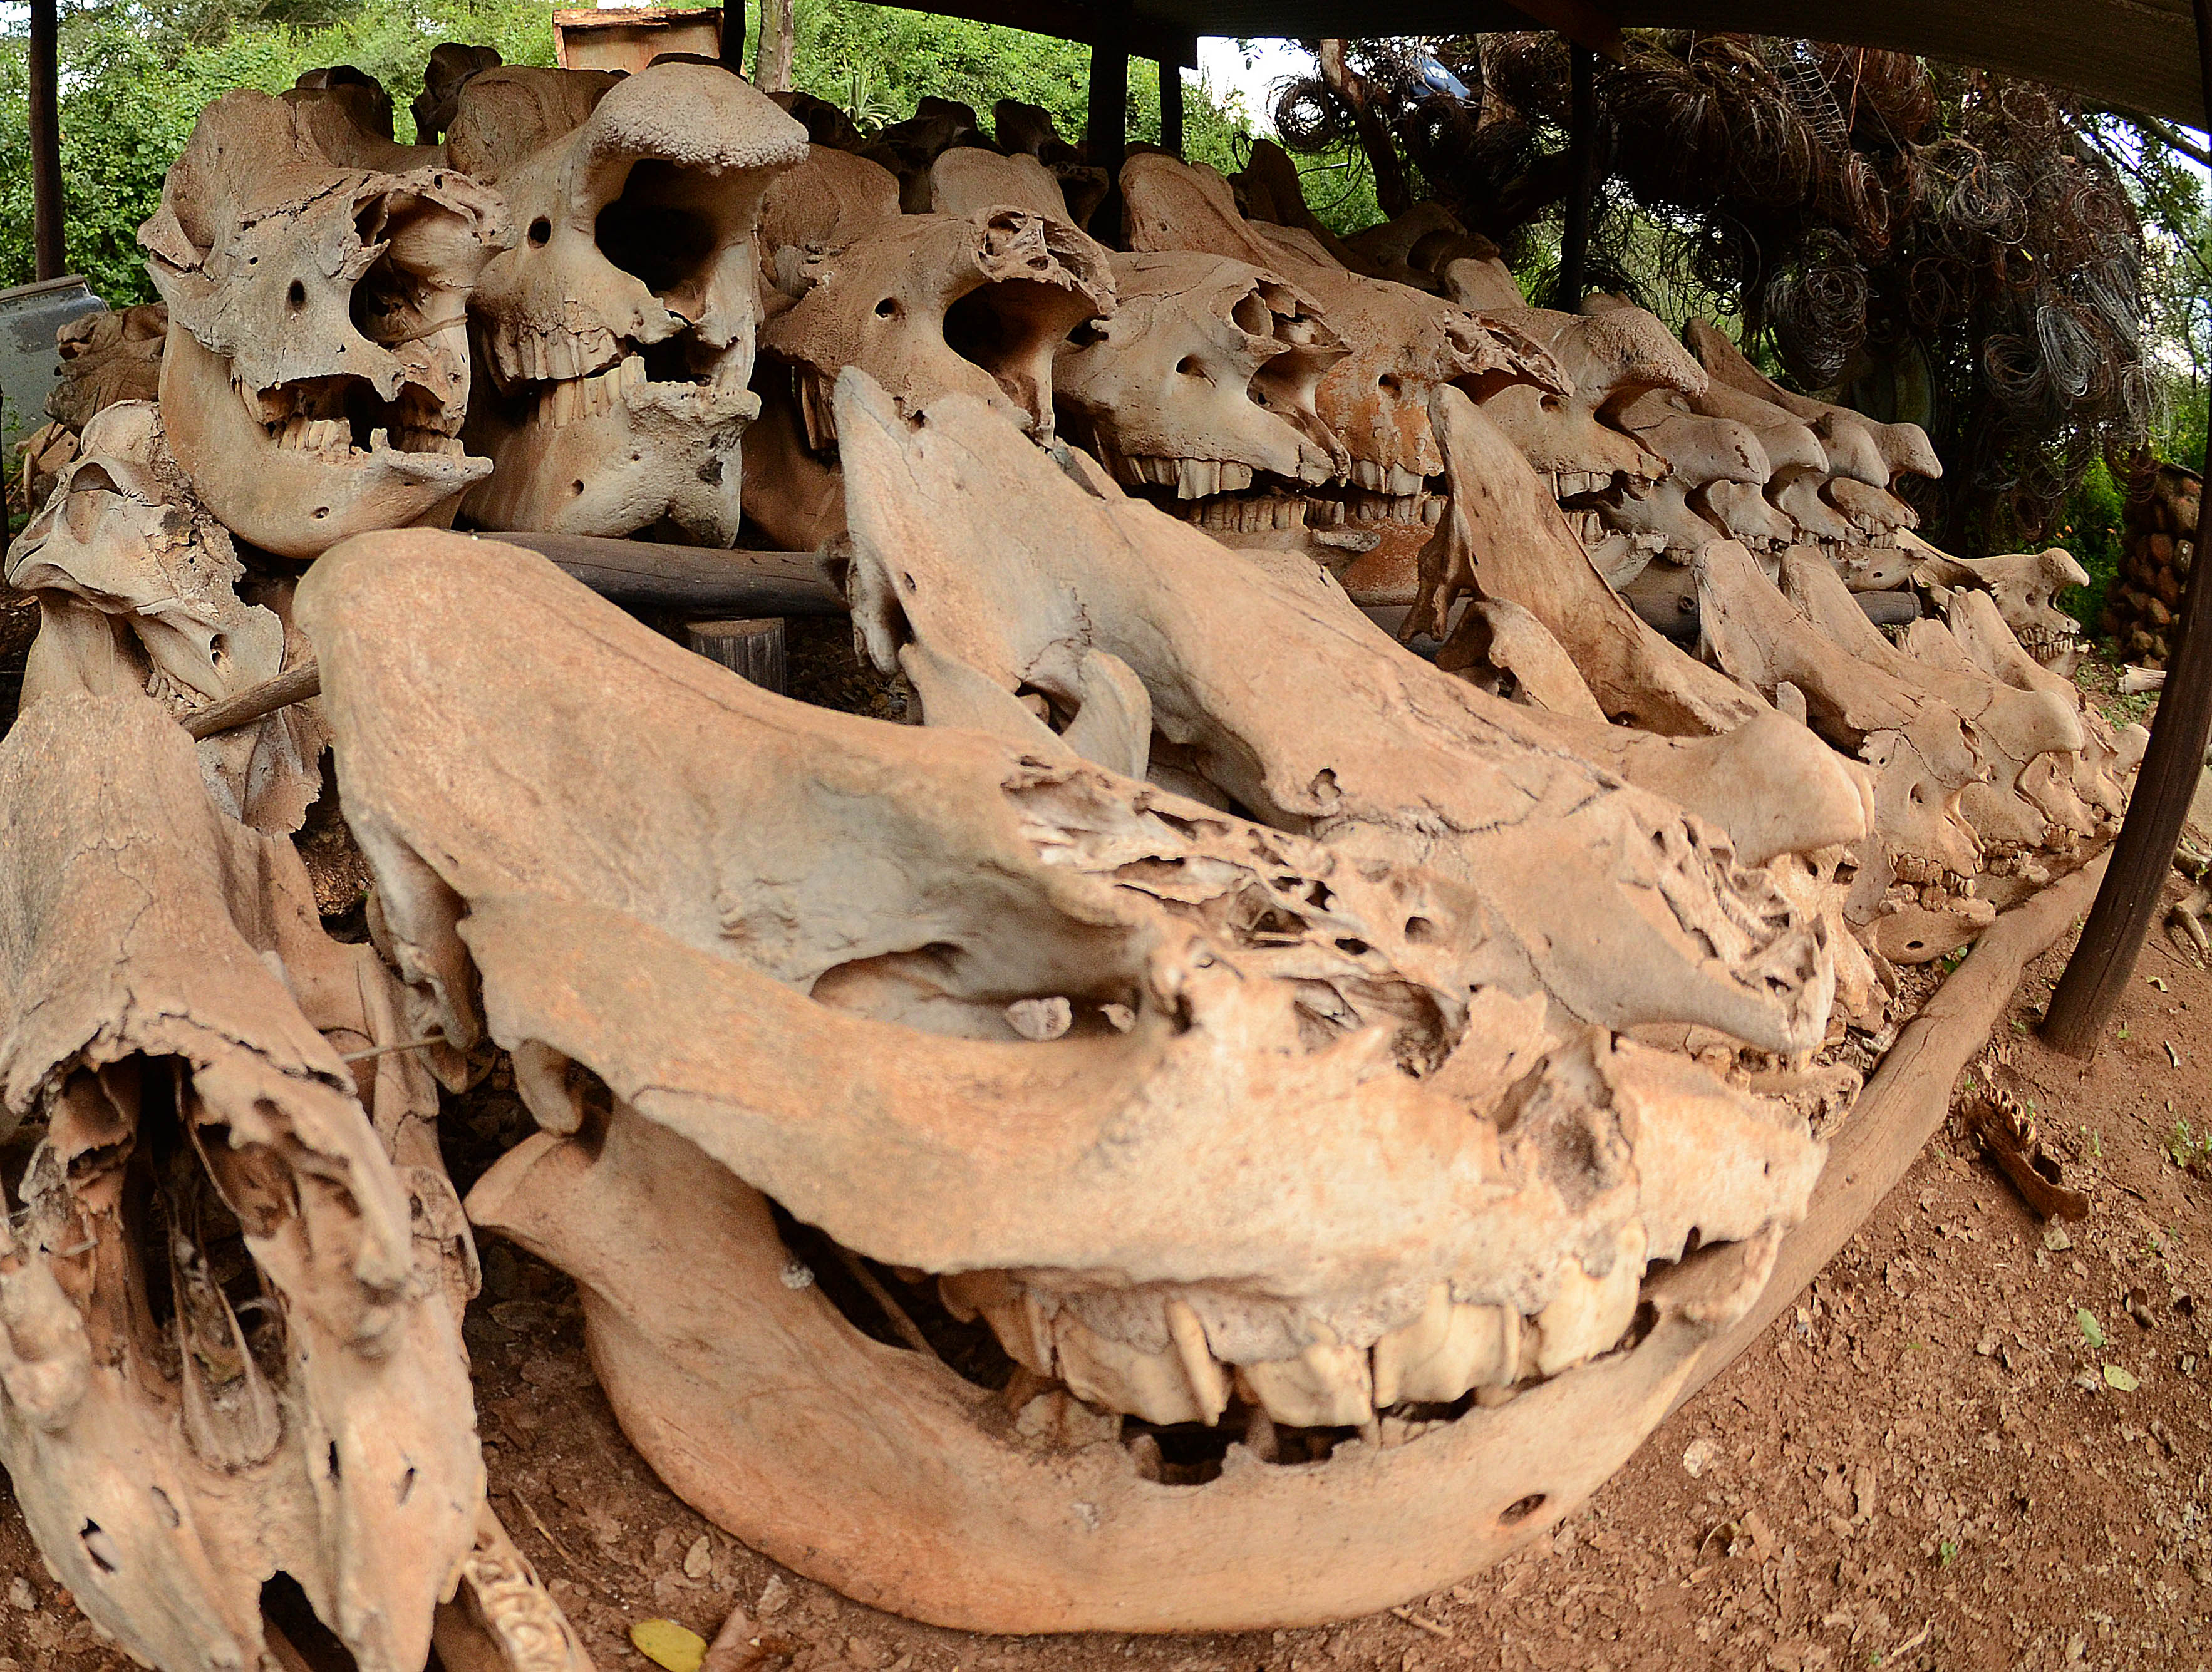 Rhino skulls from poached rhinos